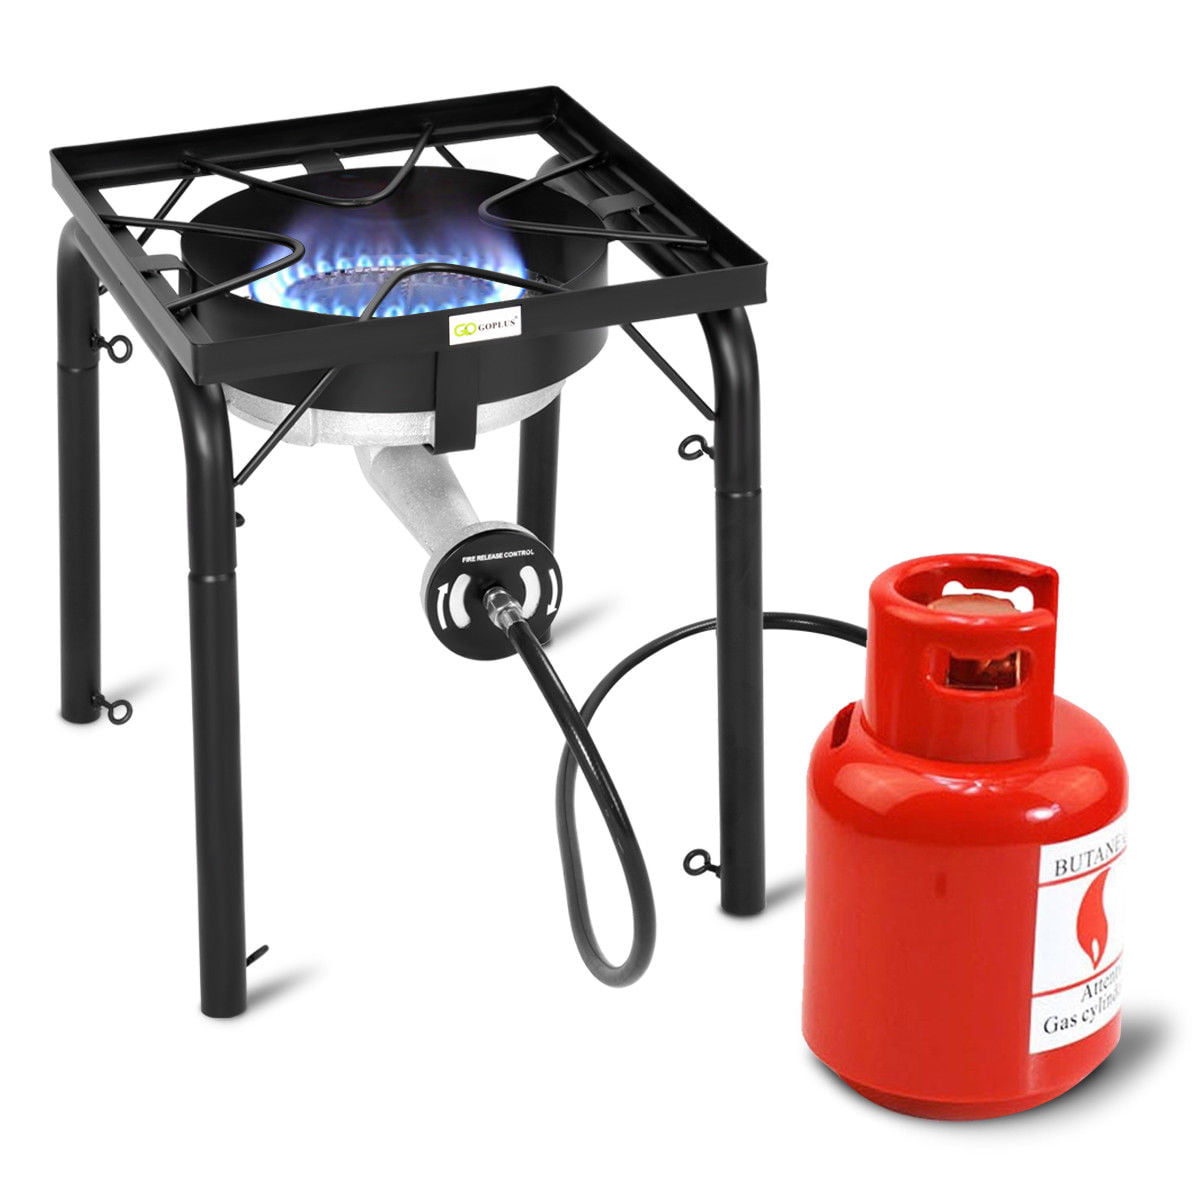 Minimalist Single Burner Gas Stove for Simple Design